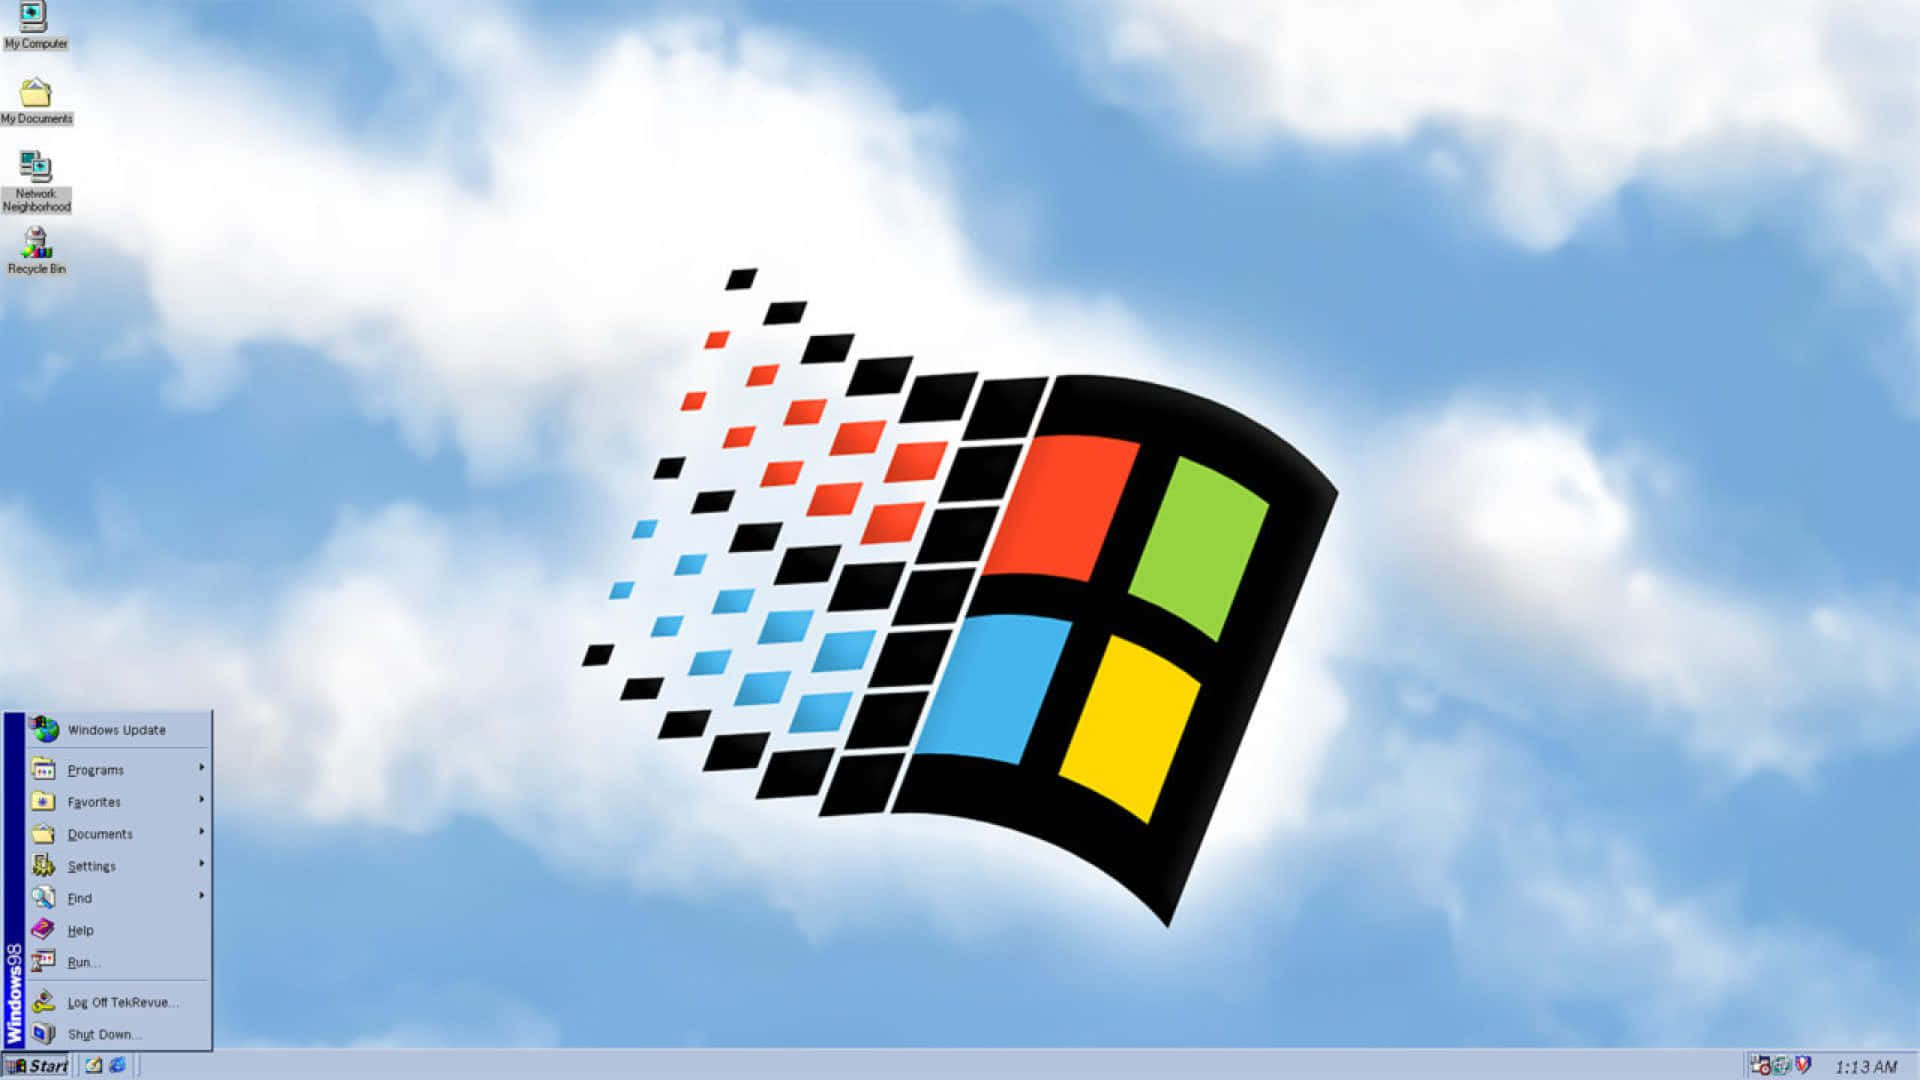 An image of Windows 98 desktop operating system